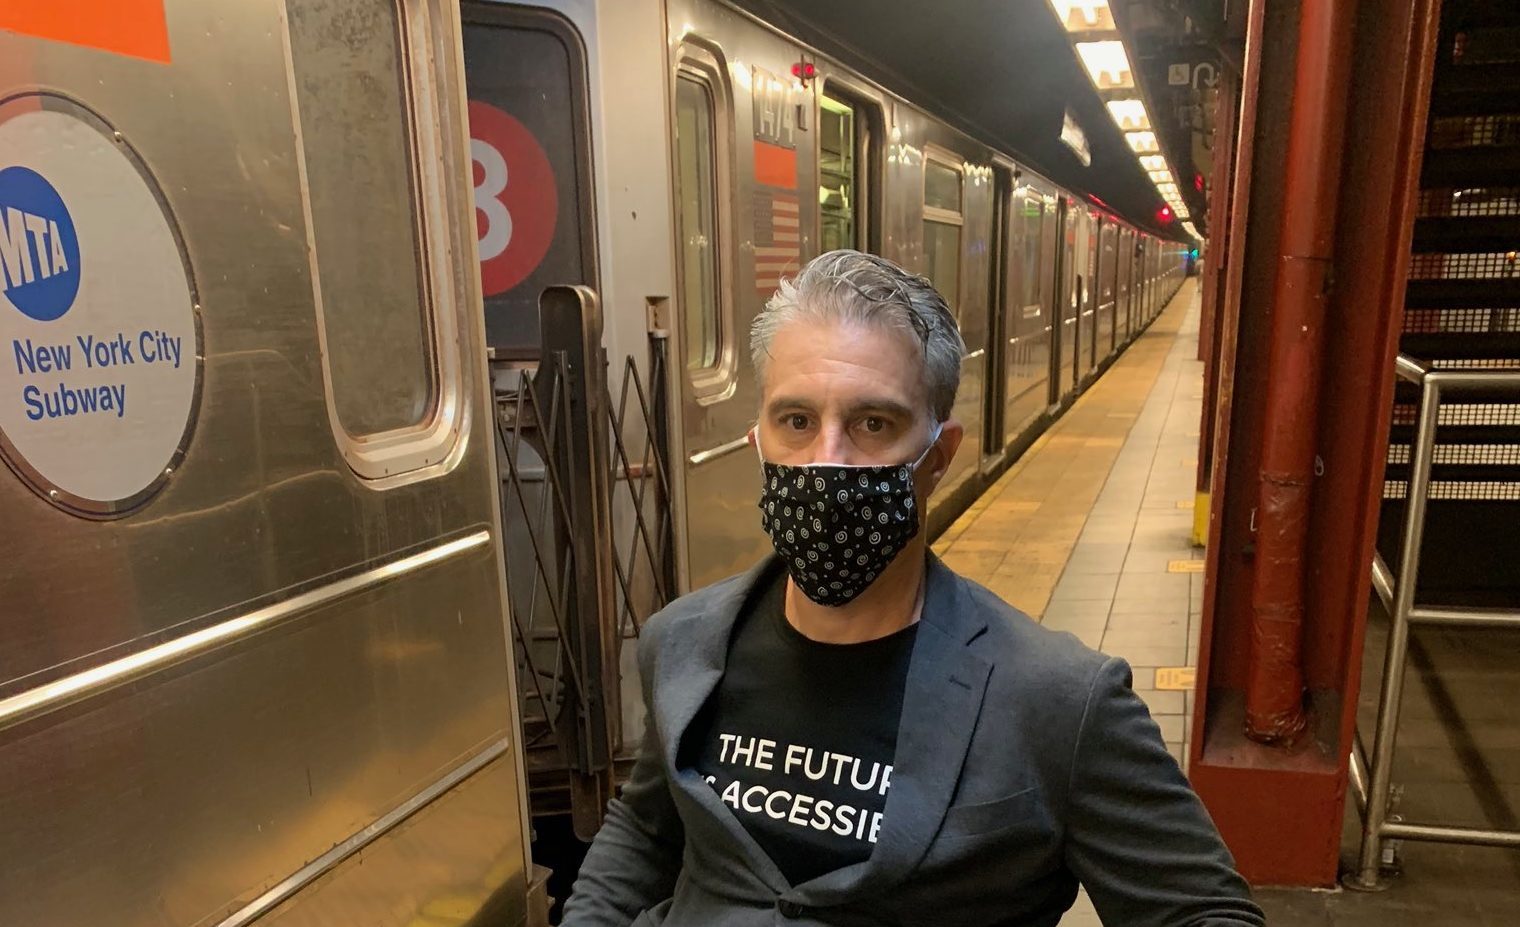 NYC's MTA keeps construction going during coronavirus crisis